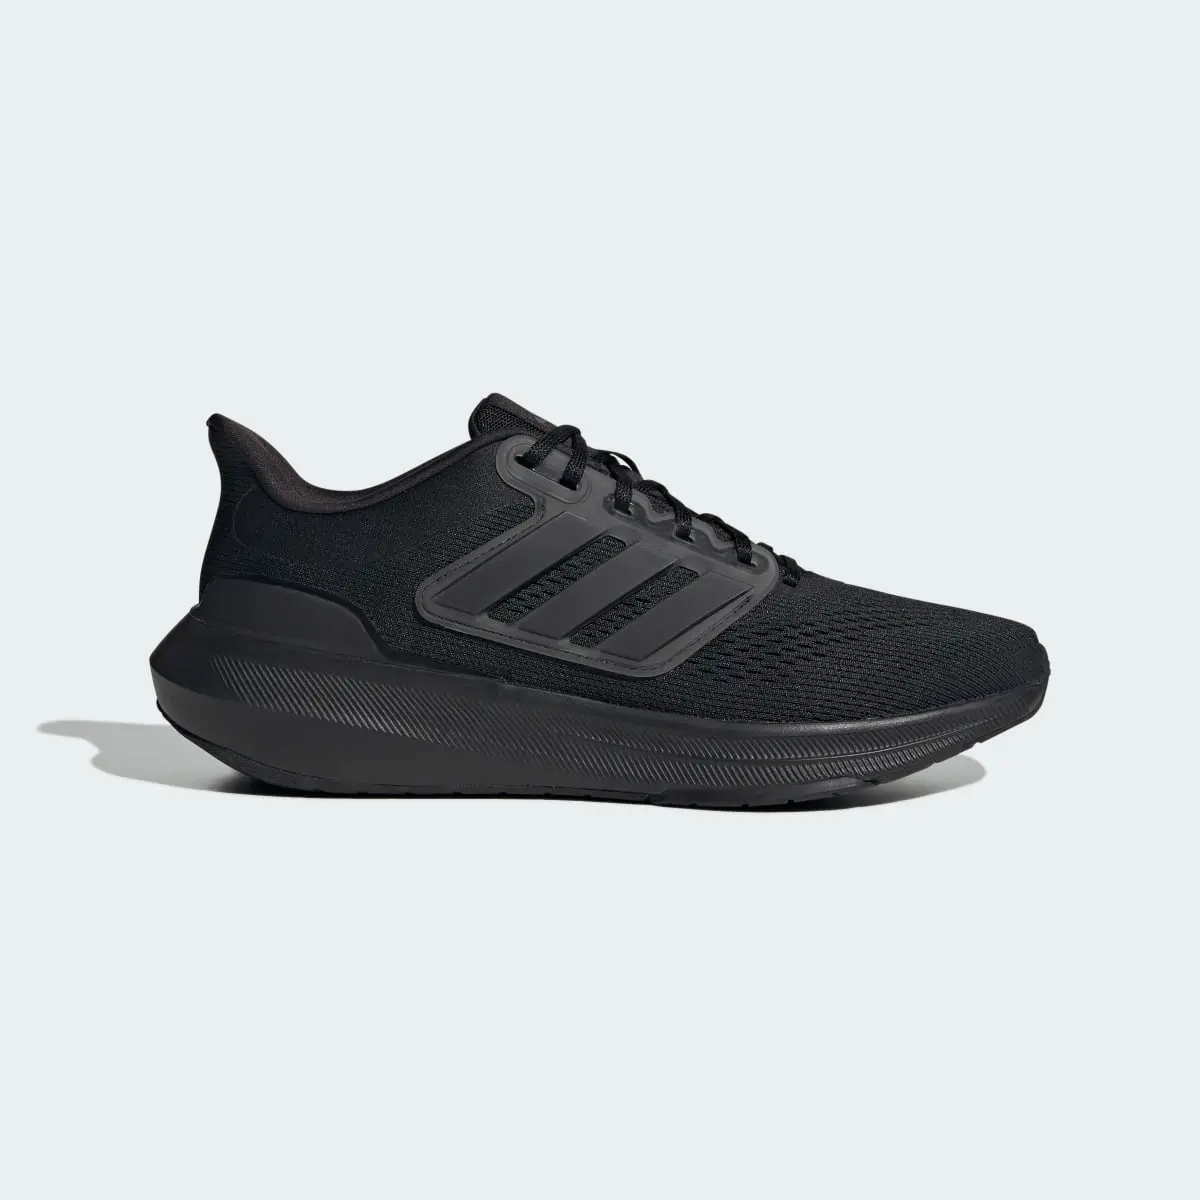 Adidas Ultrabounce Ayakkabı. 2